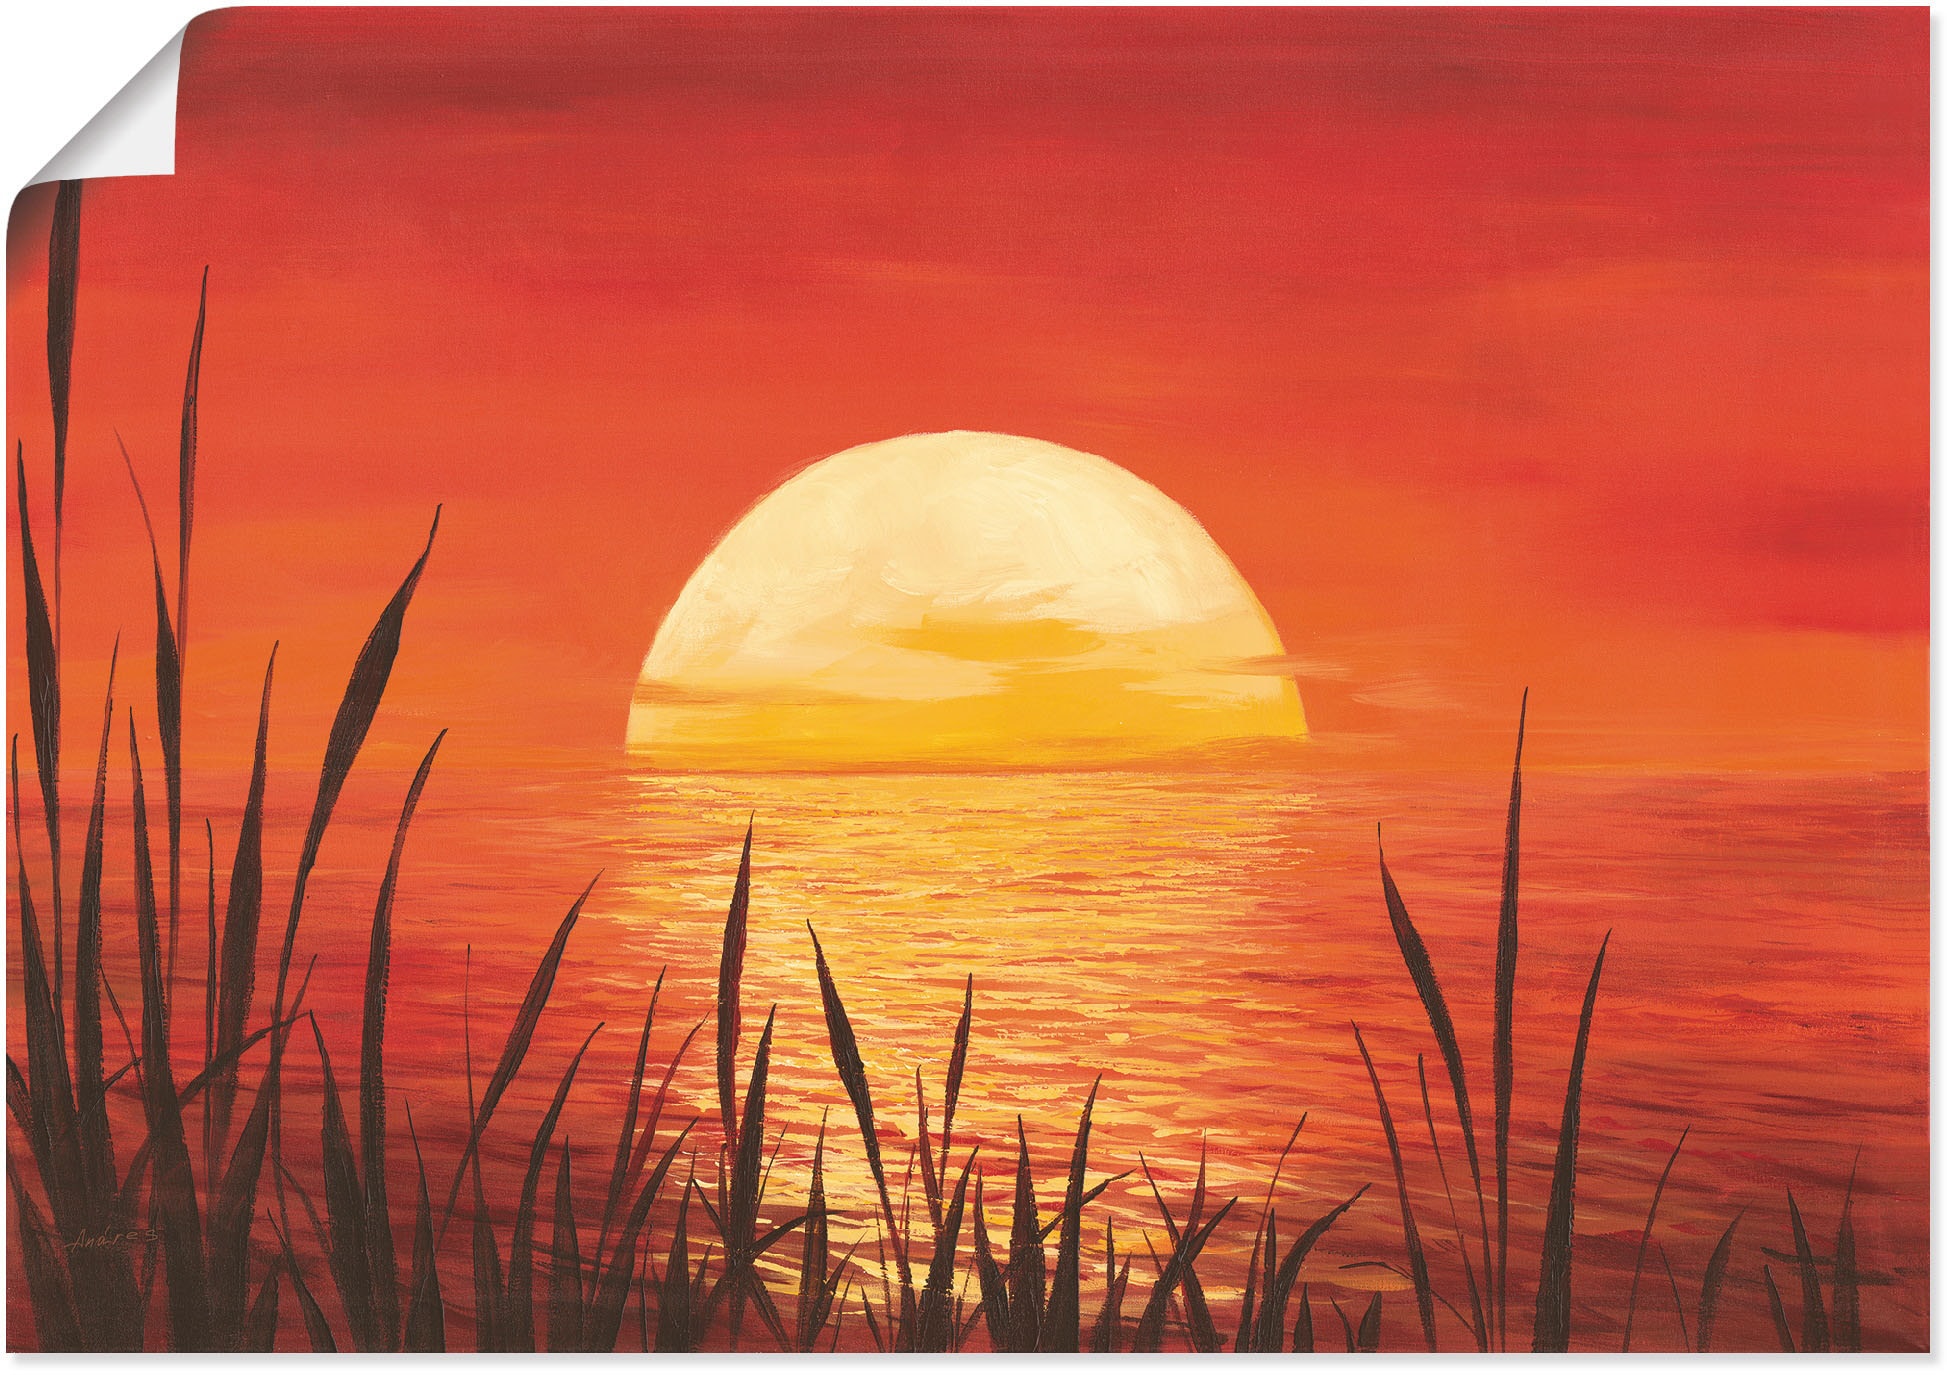 Artland Wandbild »Roter Sonnenuntergang am Ozean«, Bilder vom Sonnenuntergang & -aufgang (1 Stück), in vielen Grössen & Produktarten - Alubild / Outdoorbild, Leinwandbild, Poster, Wandaufkleber / Wandtattoo auch für Badezimmer geeignet